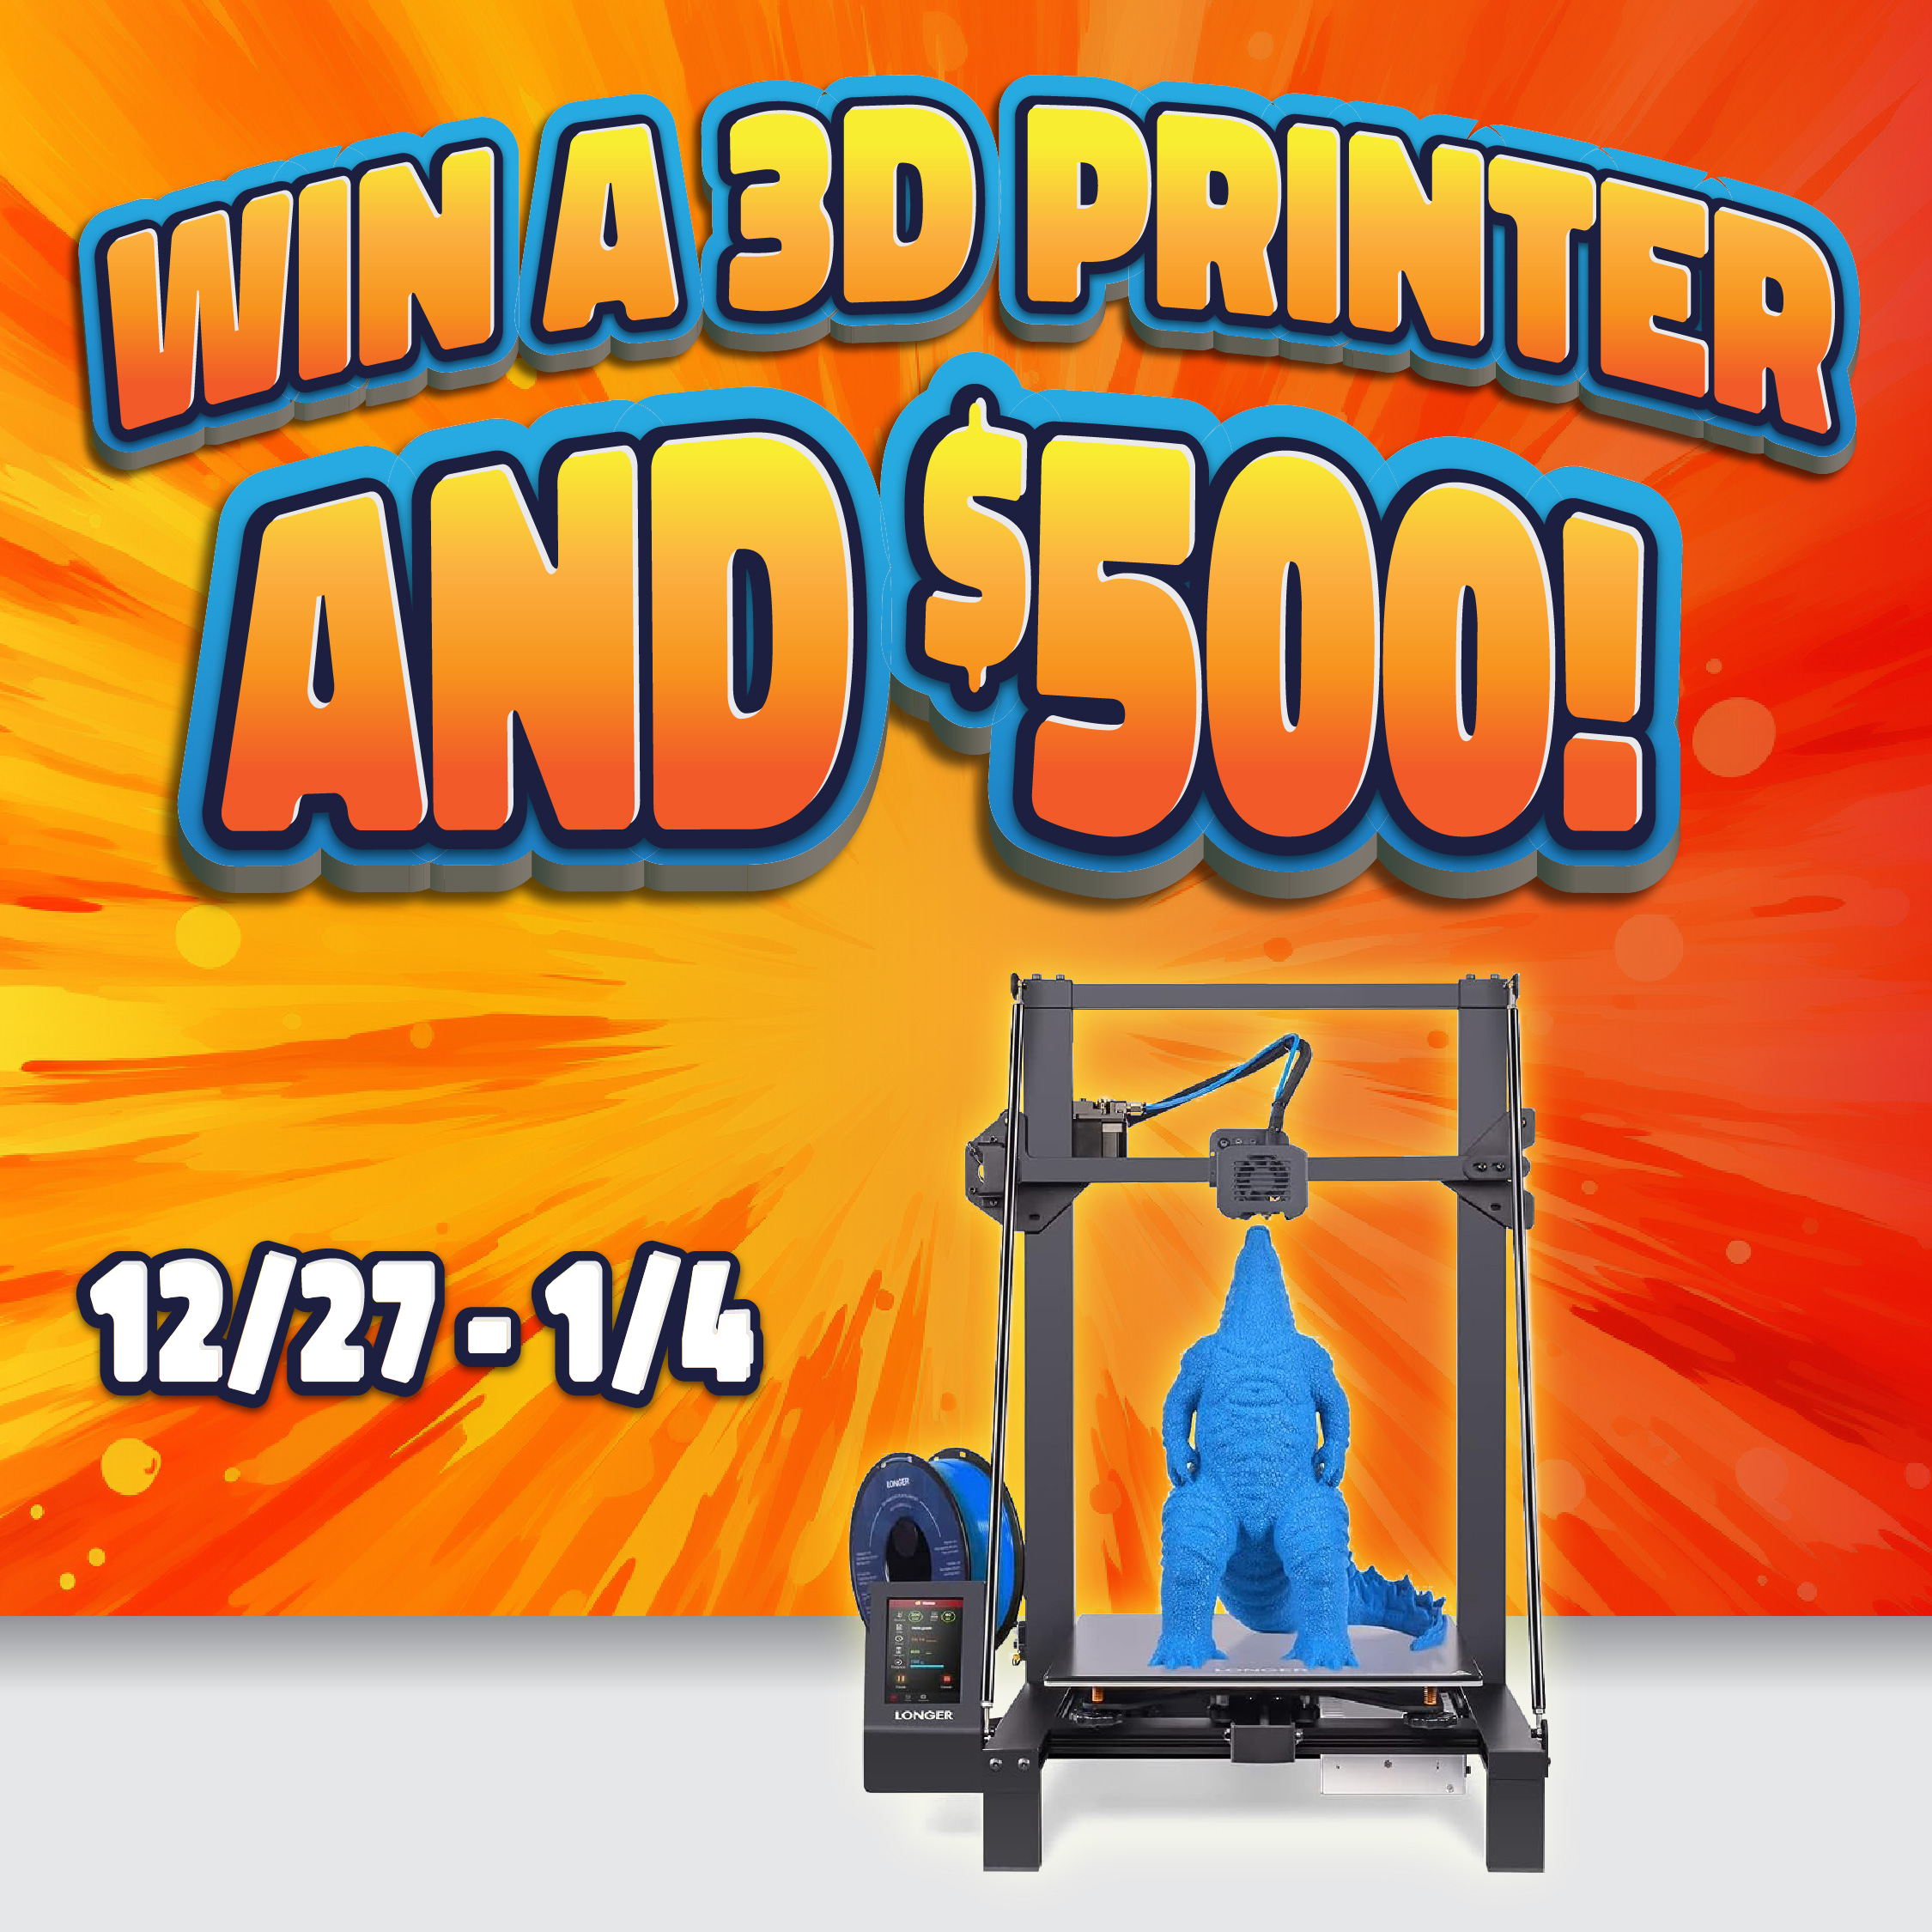 3D Printer Giveaway Image